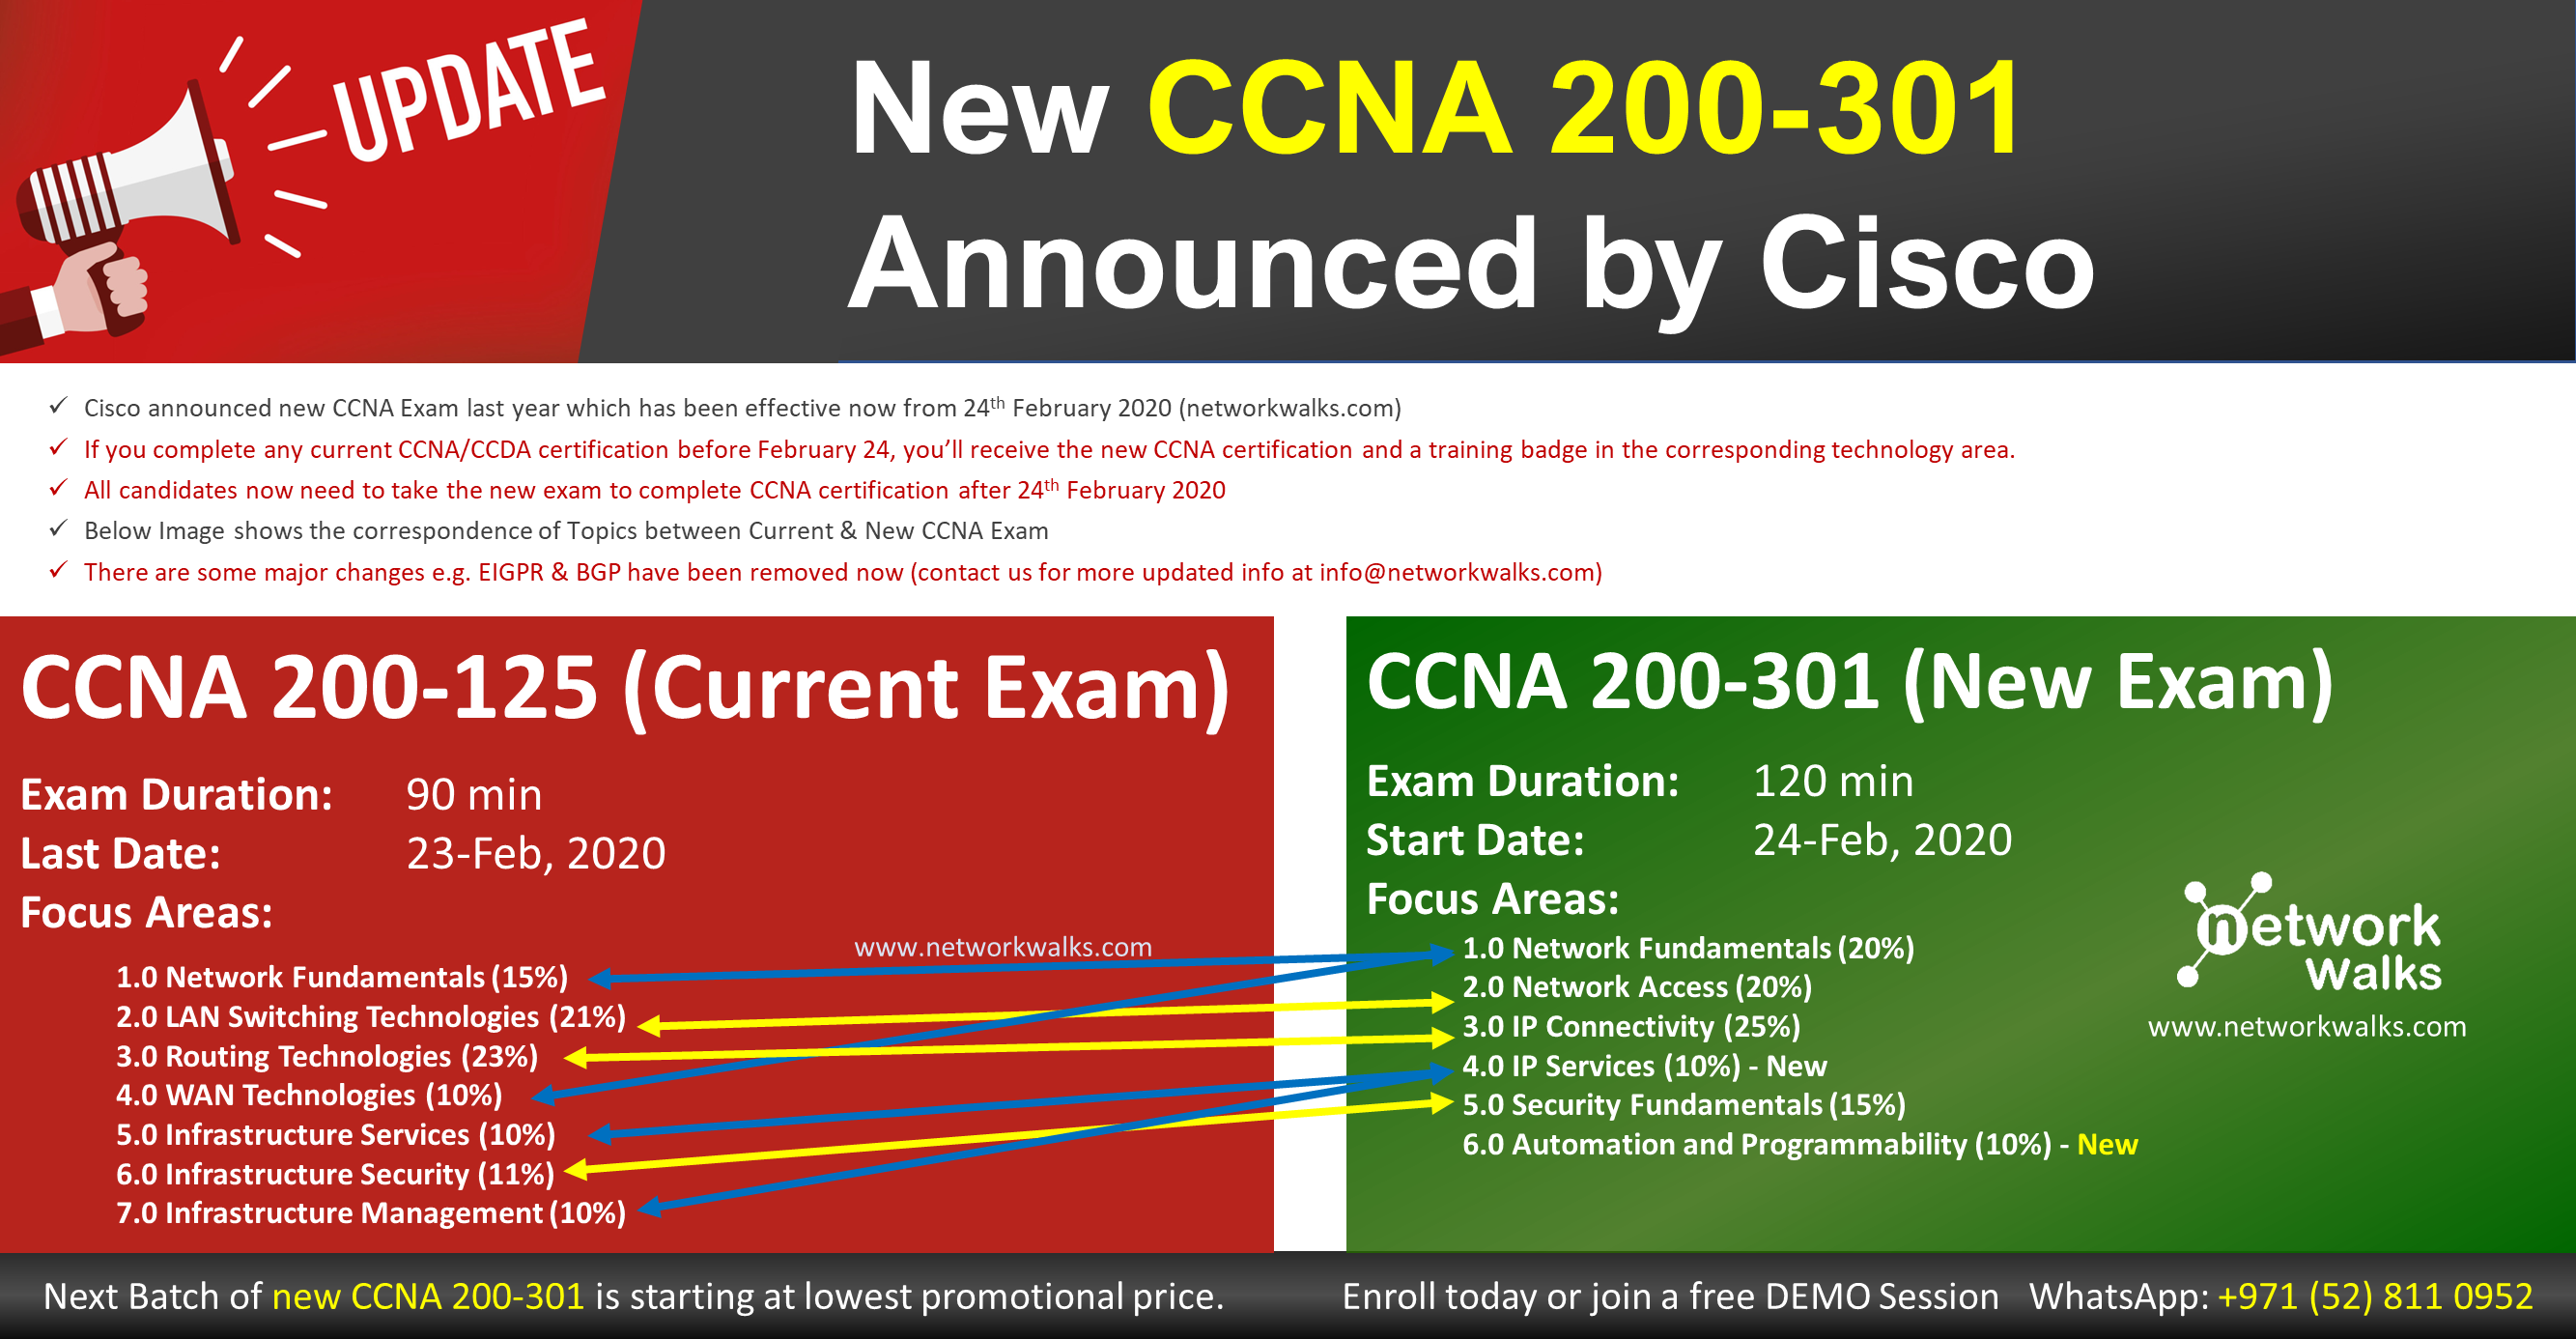 Cisco has announced New Certification including CCNA 200-301